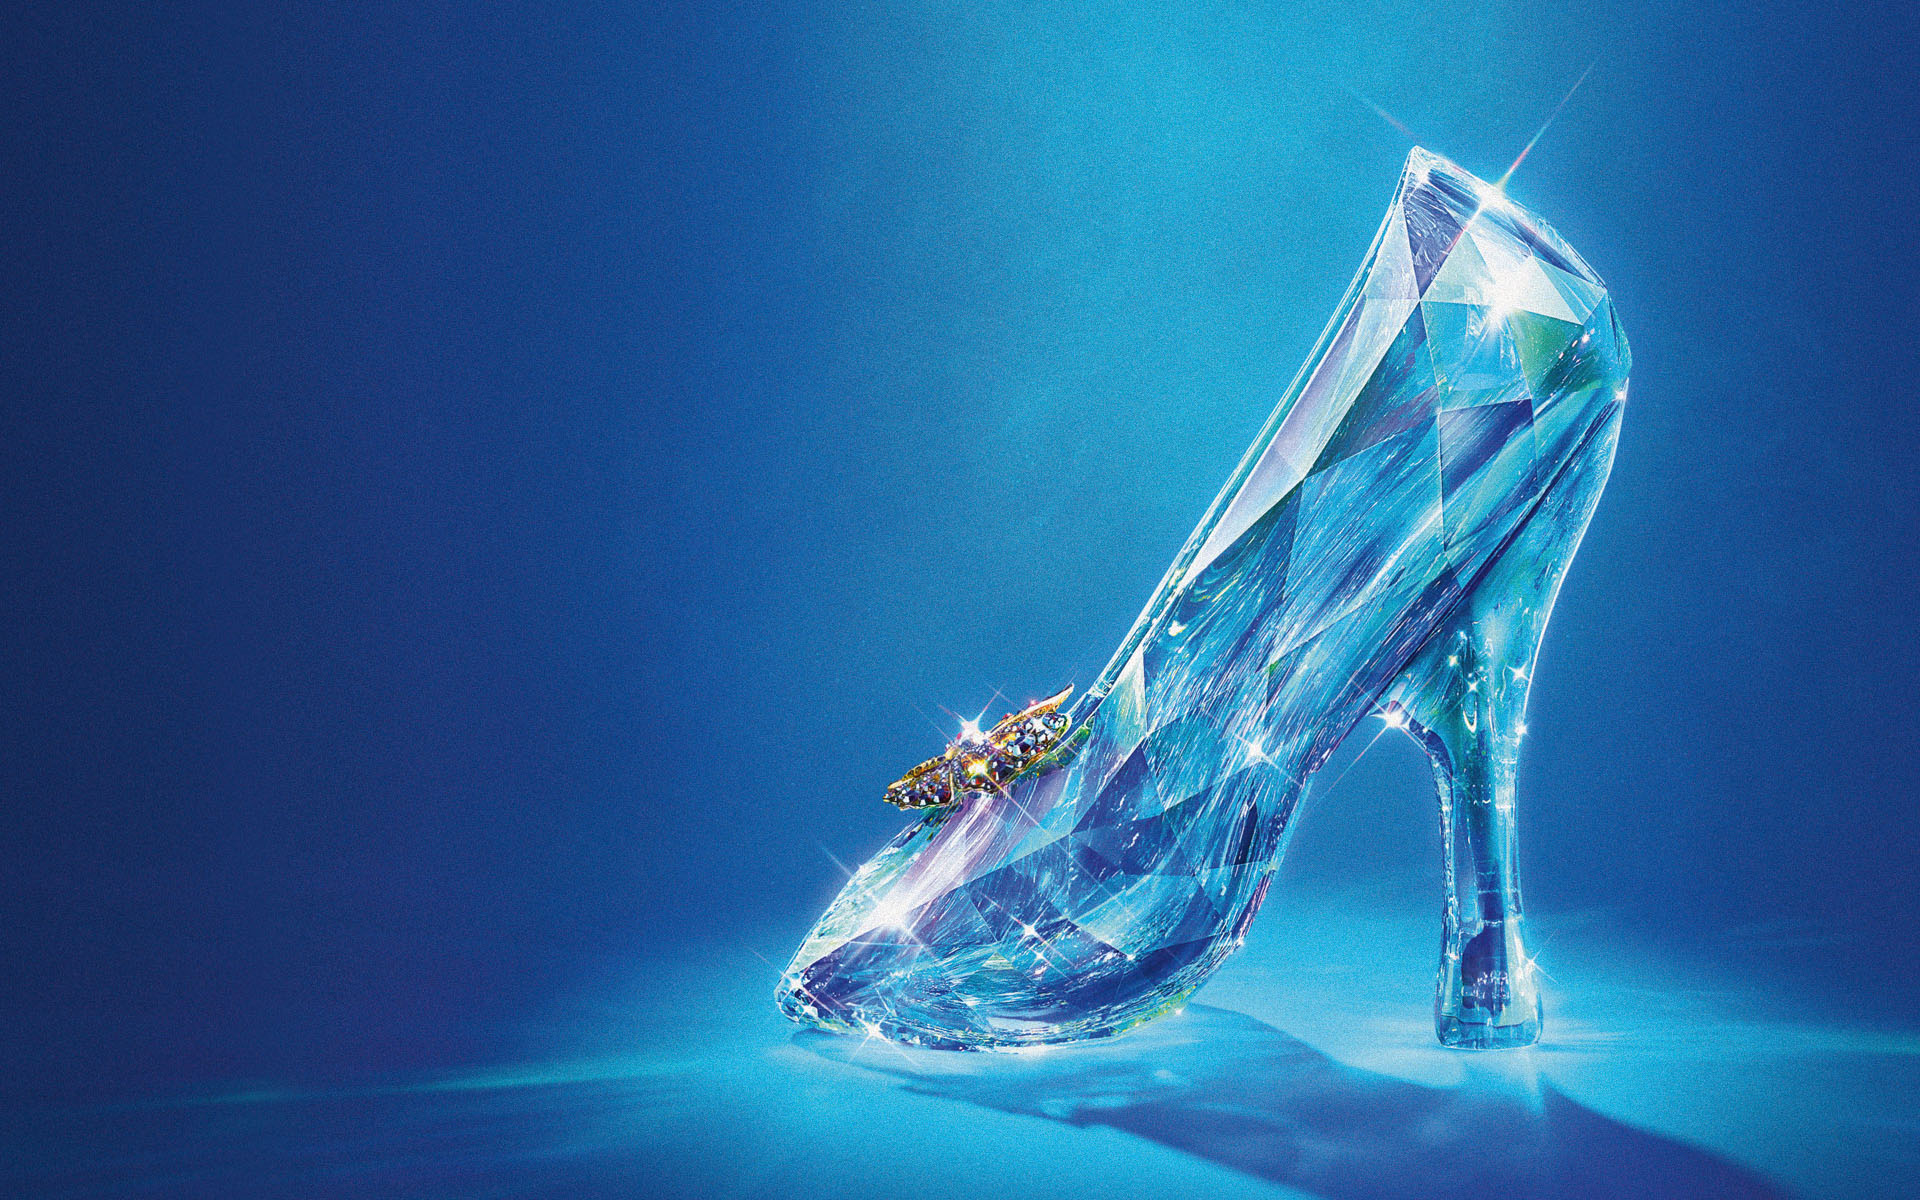 Christian Louboutin Creates Cinderella-Inspired Shoes